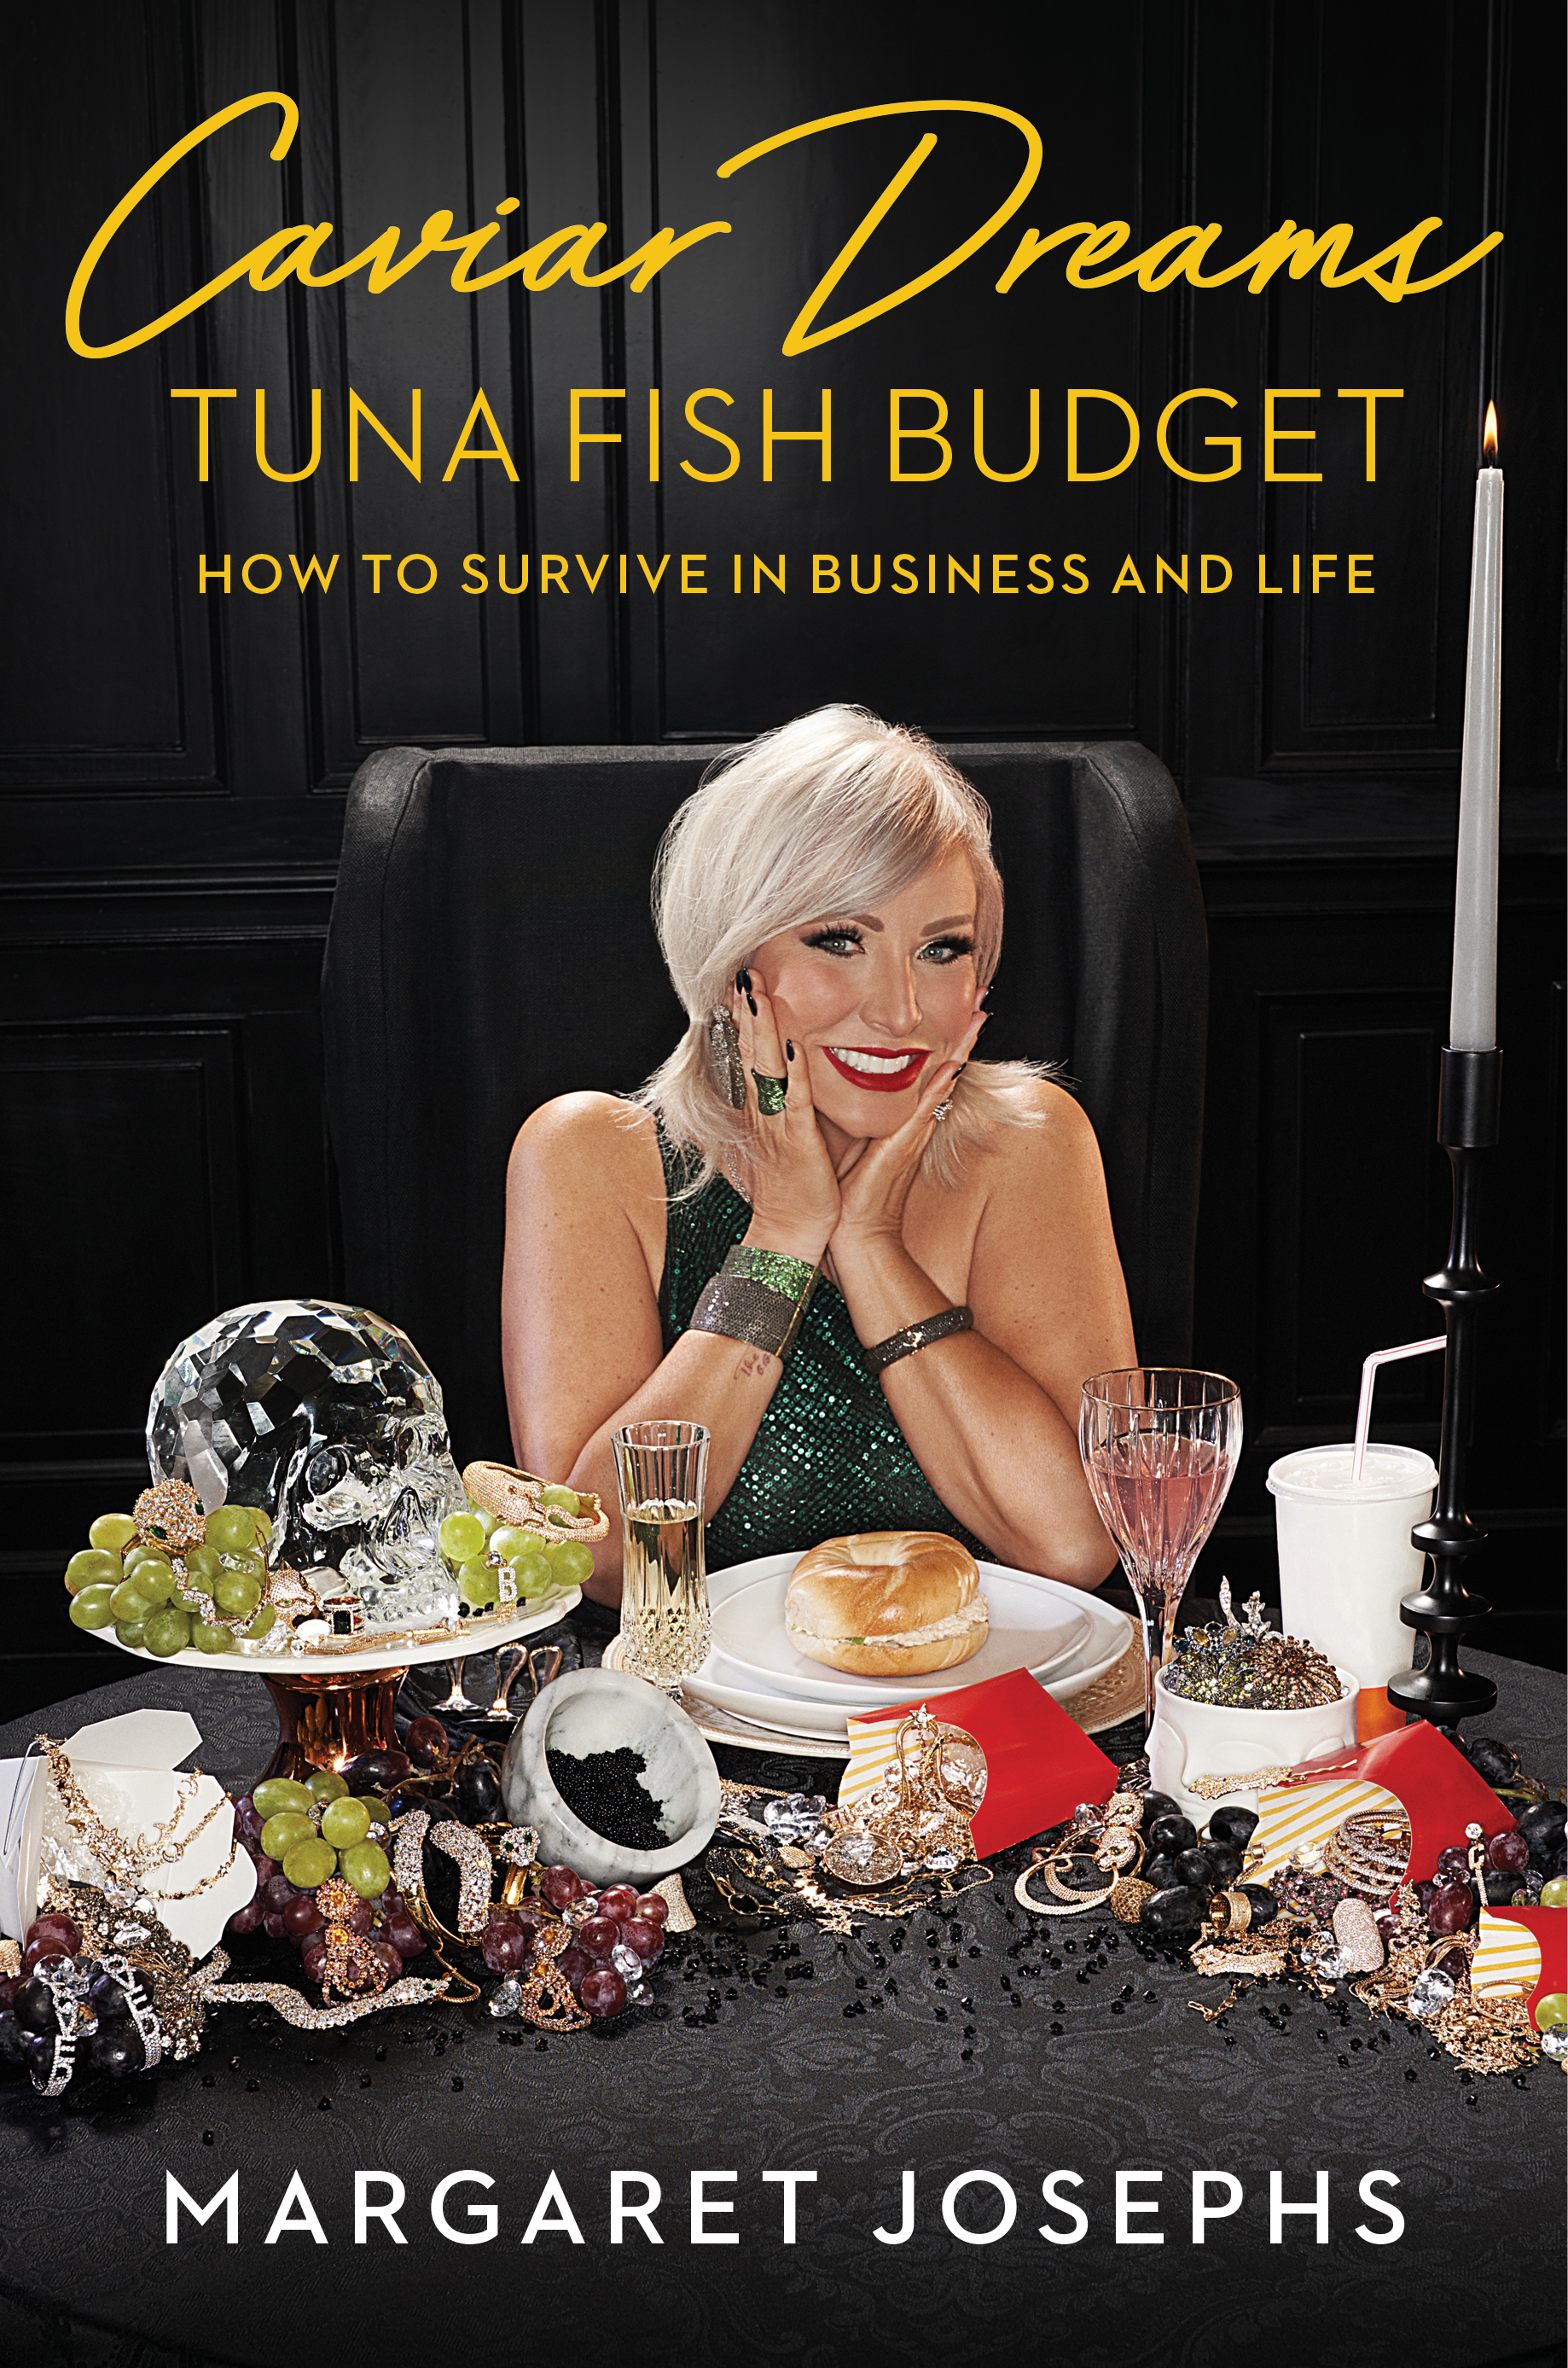 Virtual event with Margaret Josephs/Caviar Dreams, Tuna Fish Budget